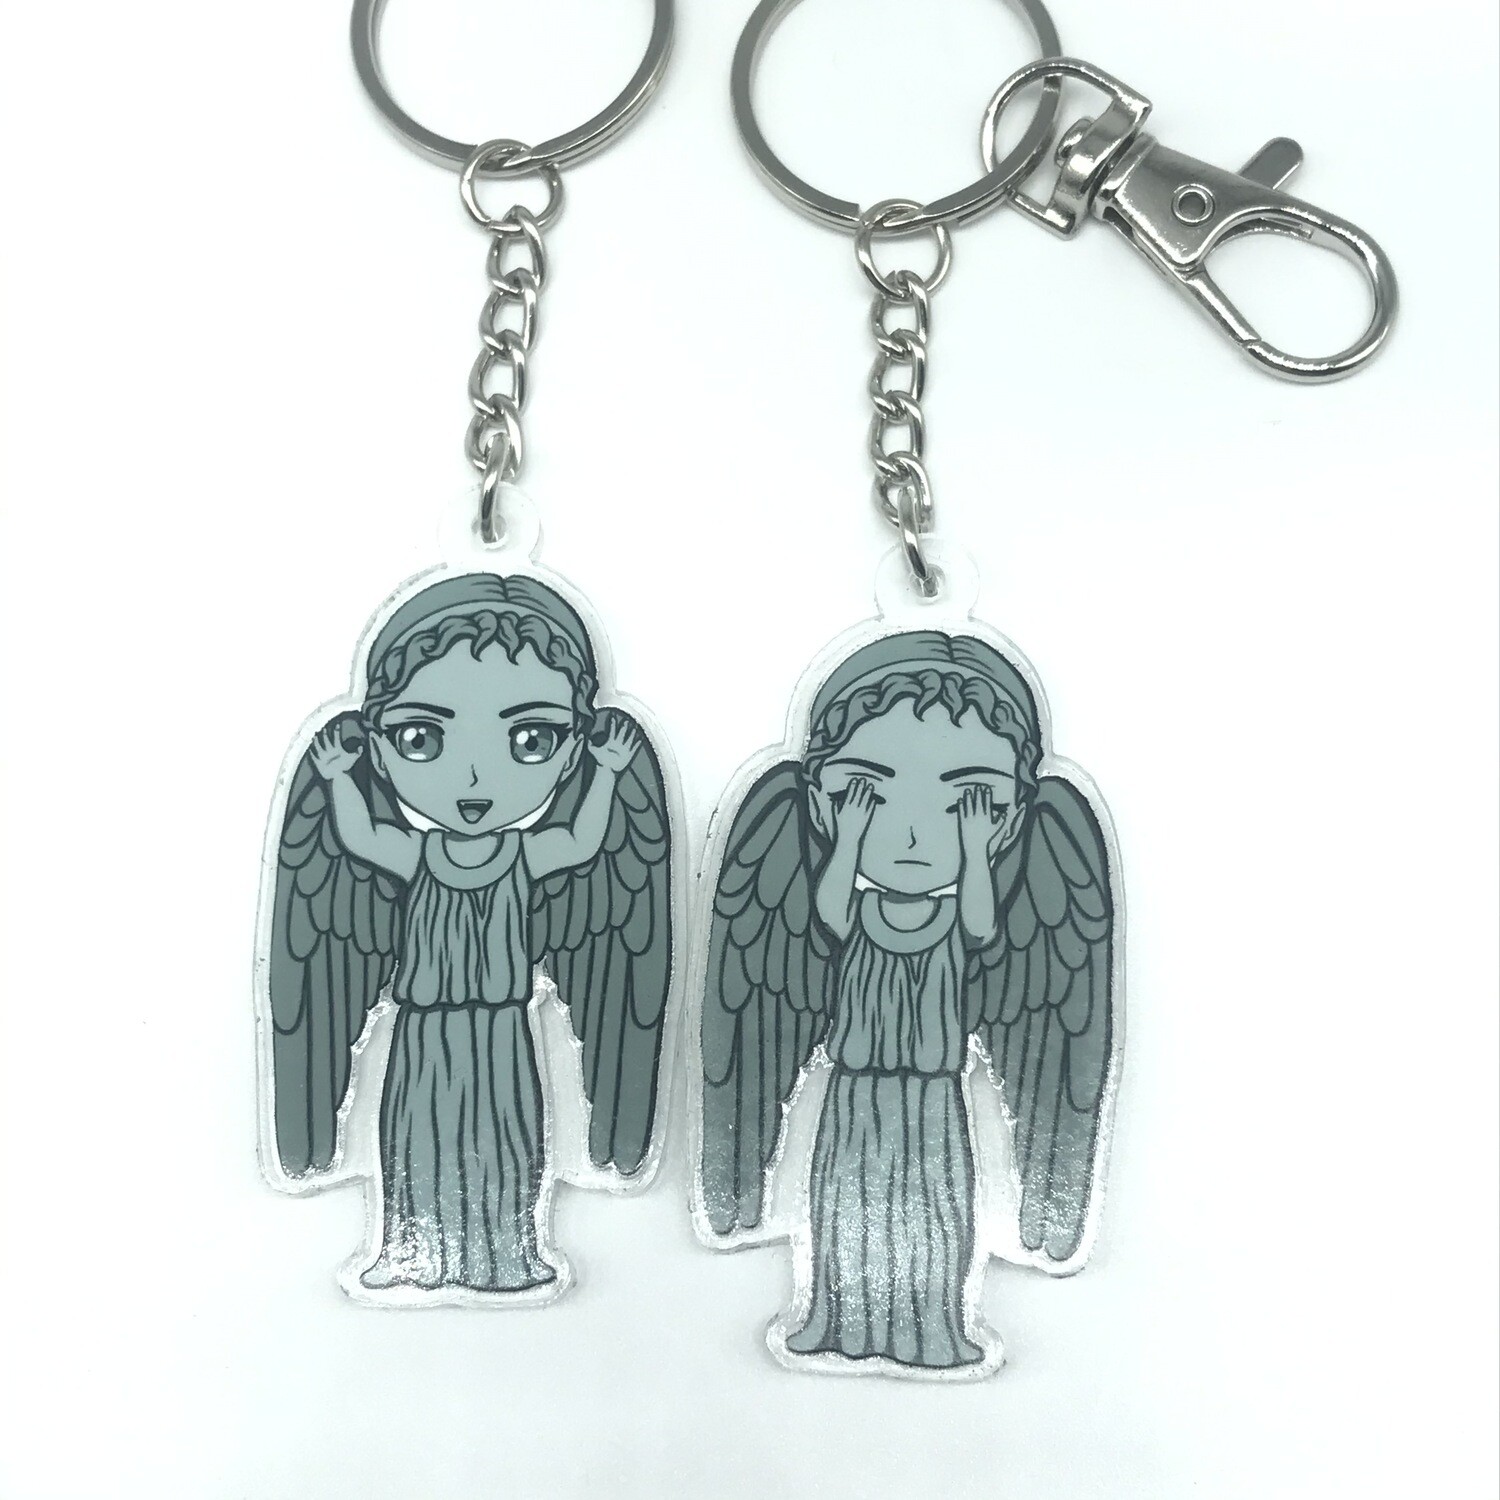 Angel double-sided acrylic charm keychain, zipper clip